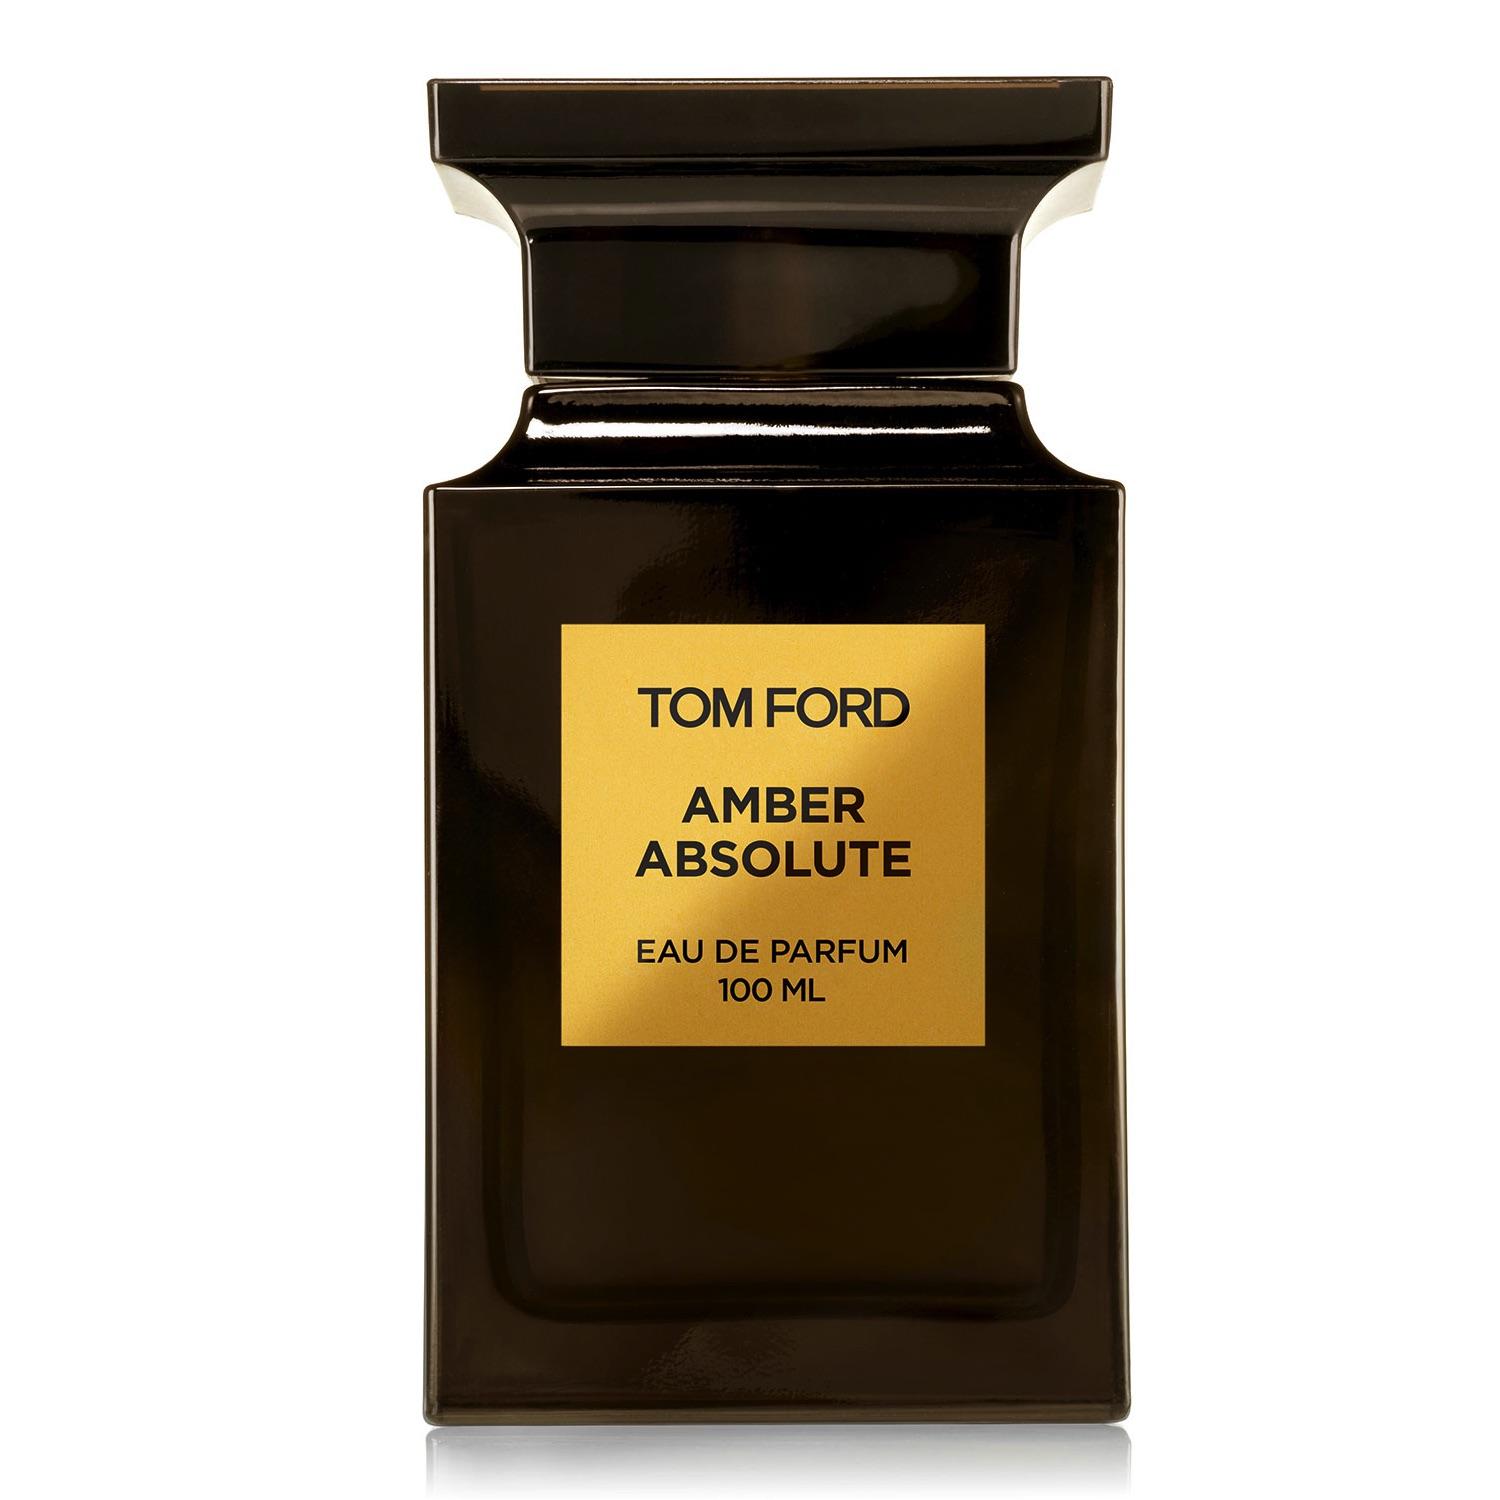 Tom Ford Amber Absolute Eau de Parfum 100ml